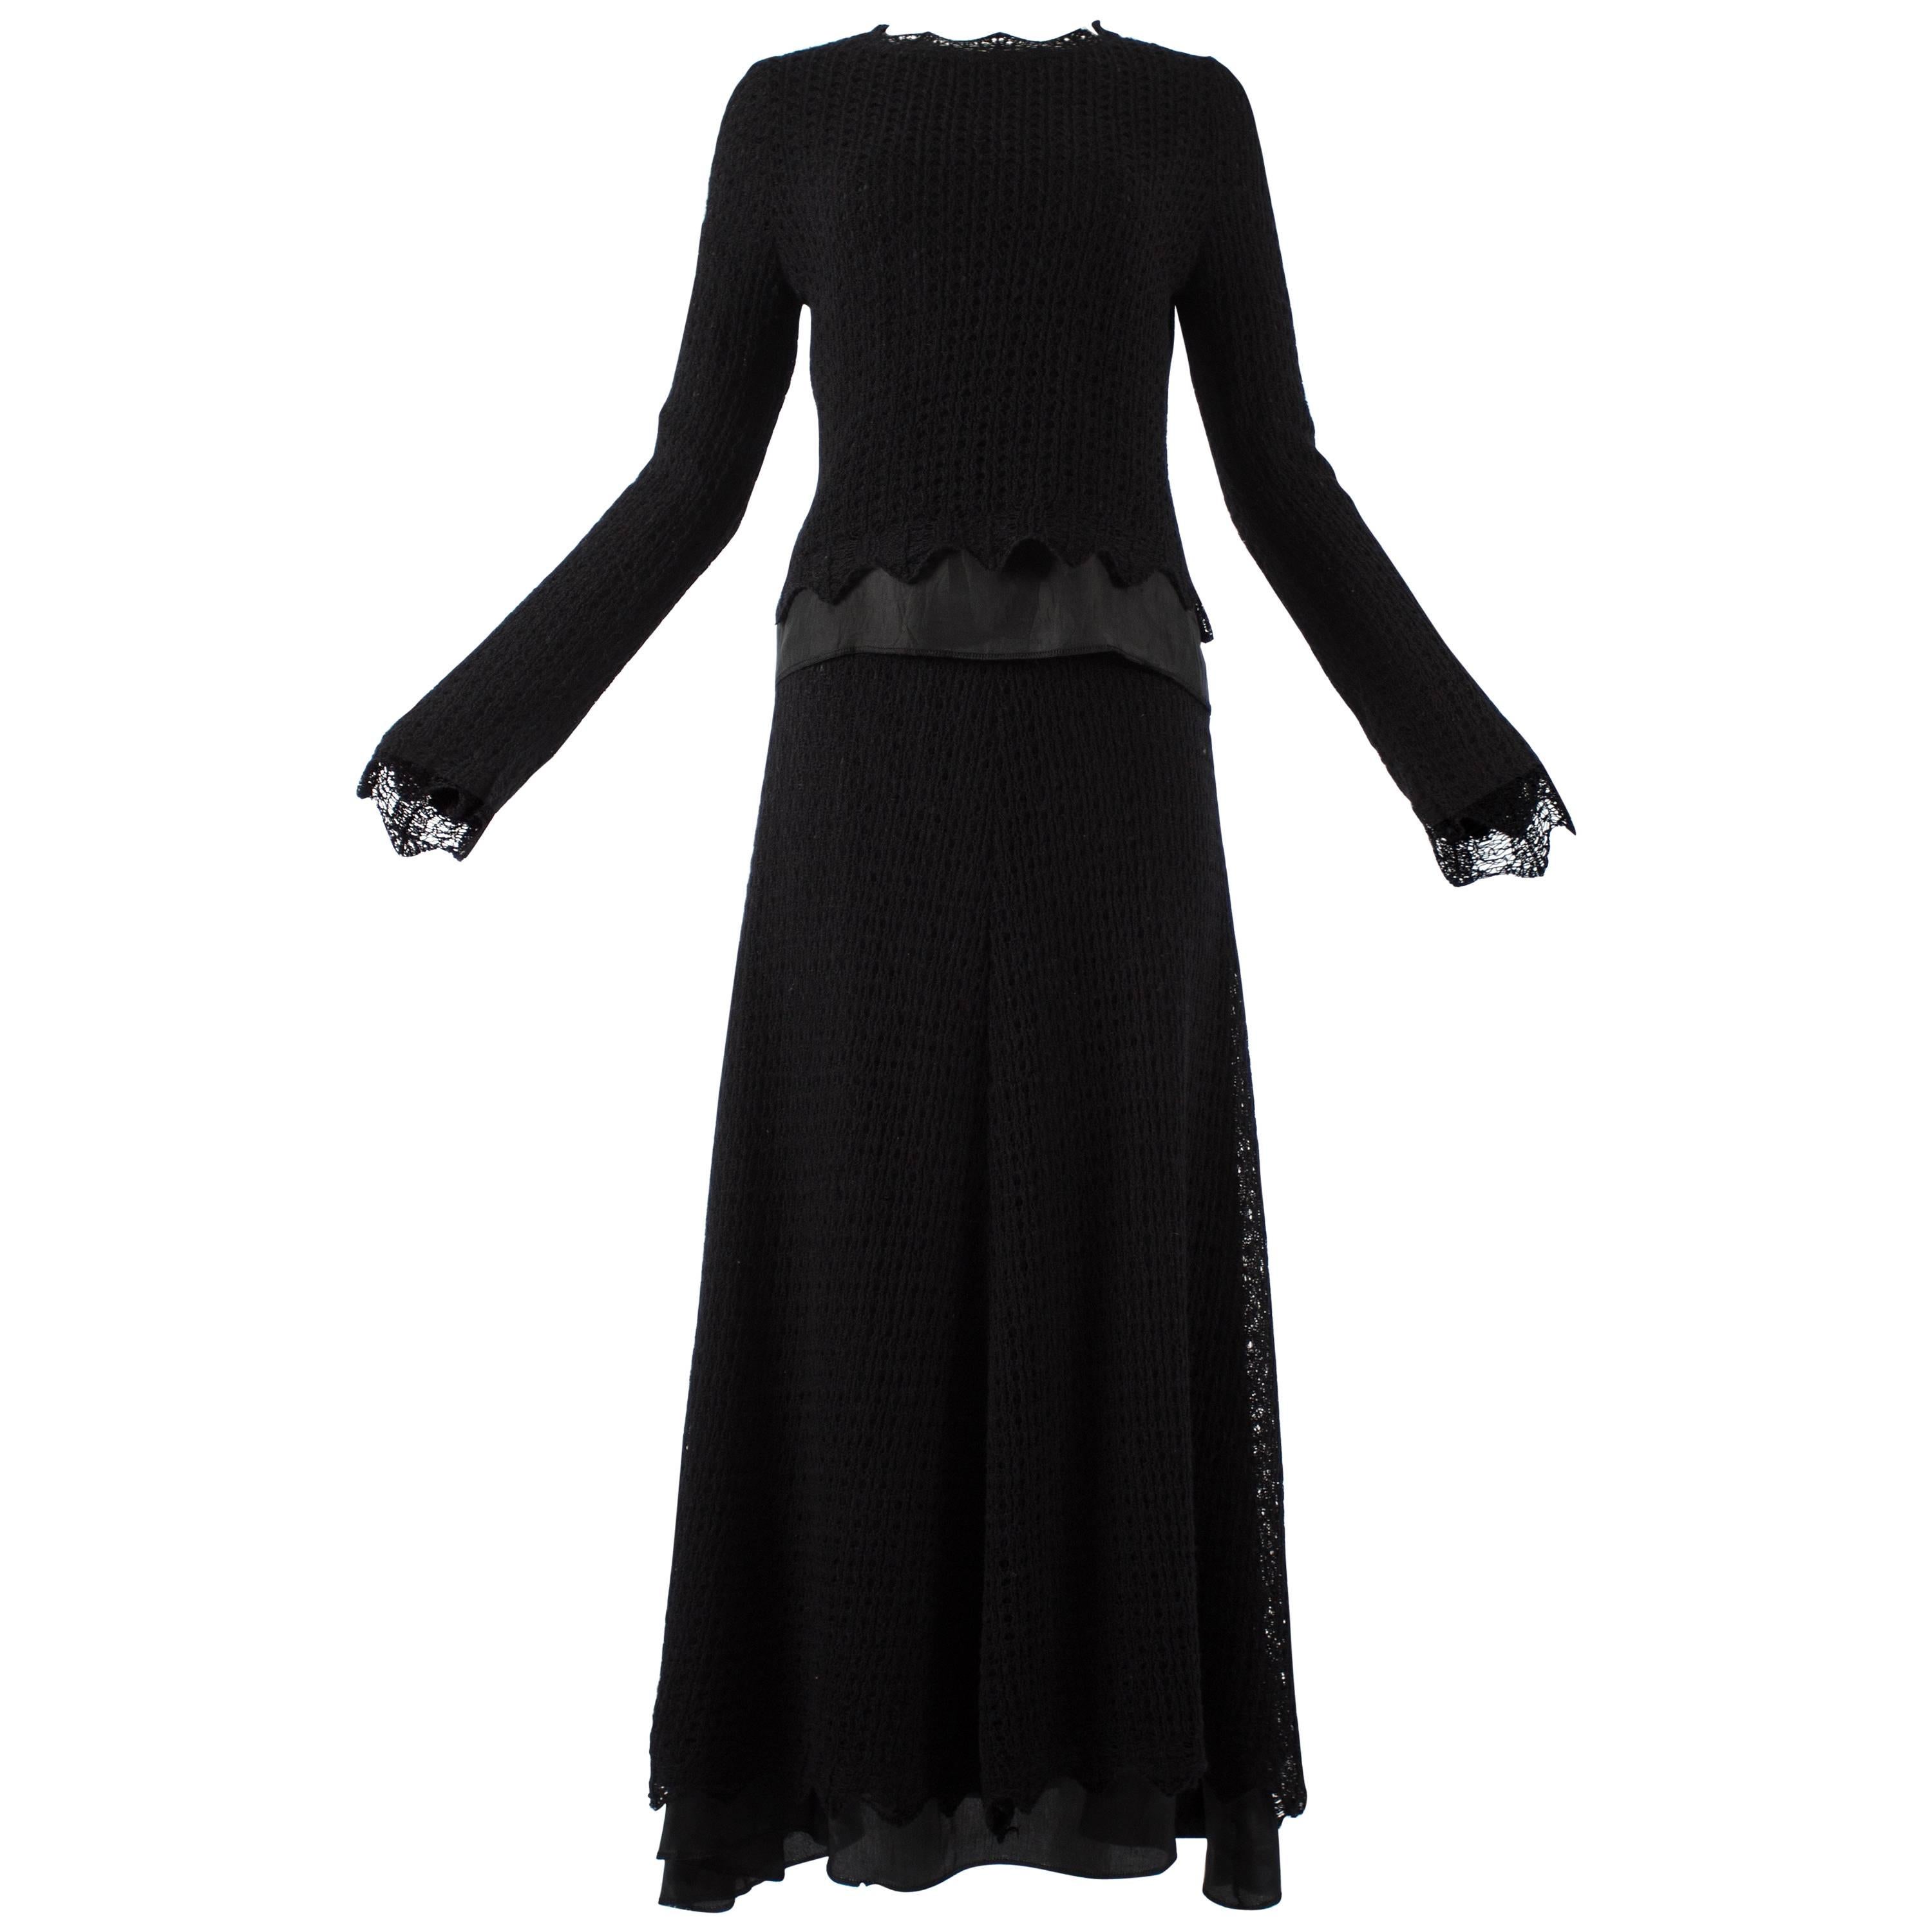 Maison Martin Margiela early 1990s black crochet wool and satin skirt suit